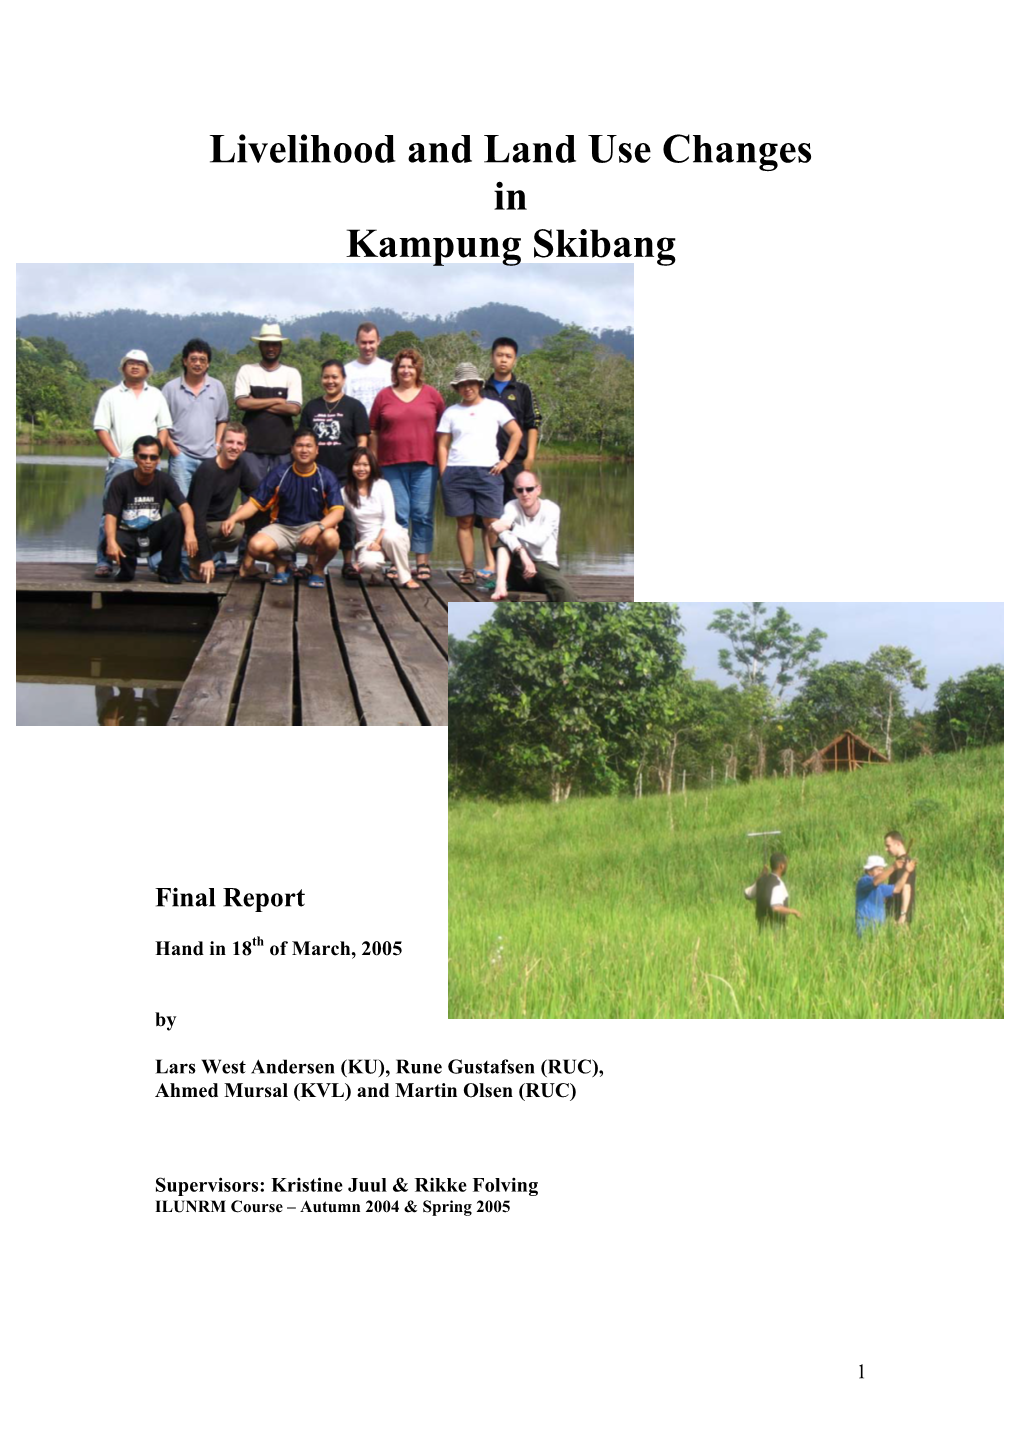 Livelihood and Land Use Changes in Kampung Skibang